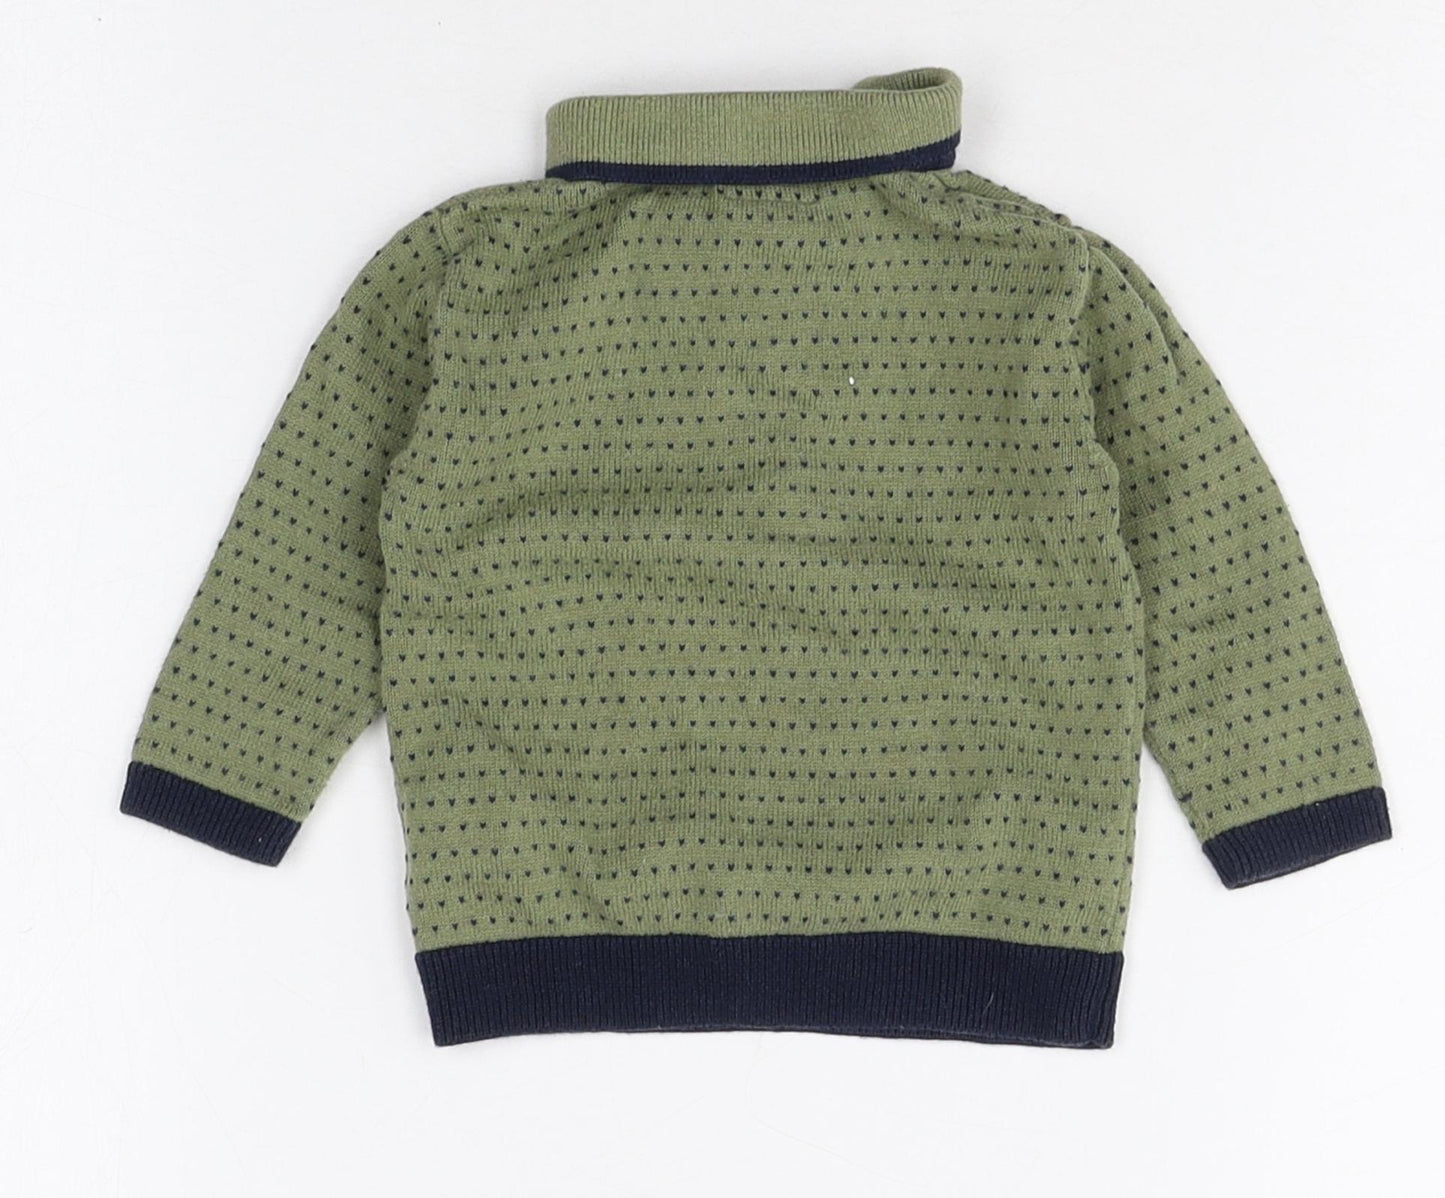 mamas & papas Boys Green Geometric 100% Cotton Basic Polo Size 0-3 Months Collared Button